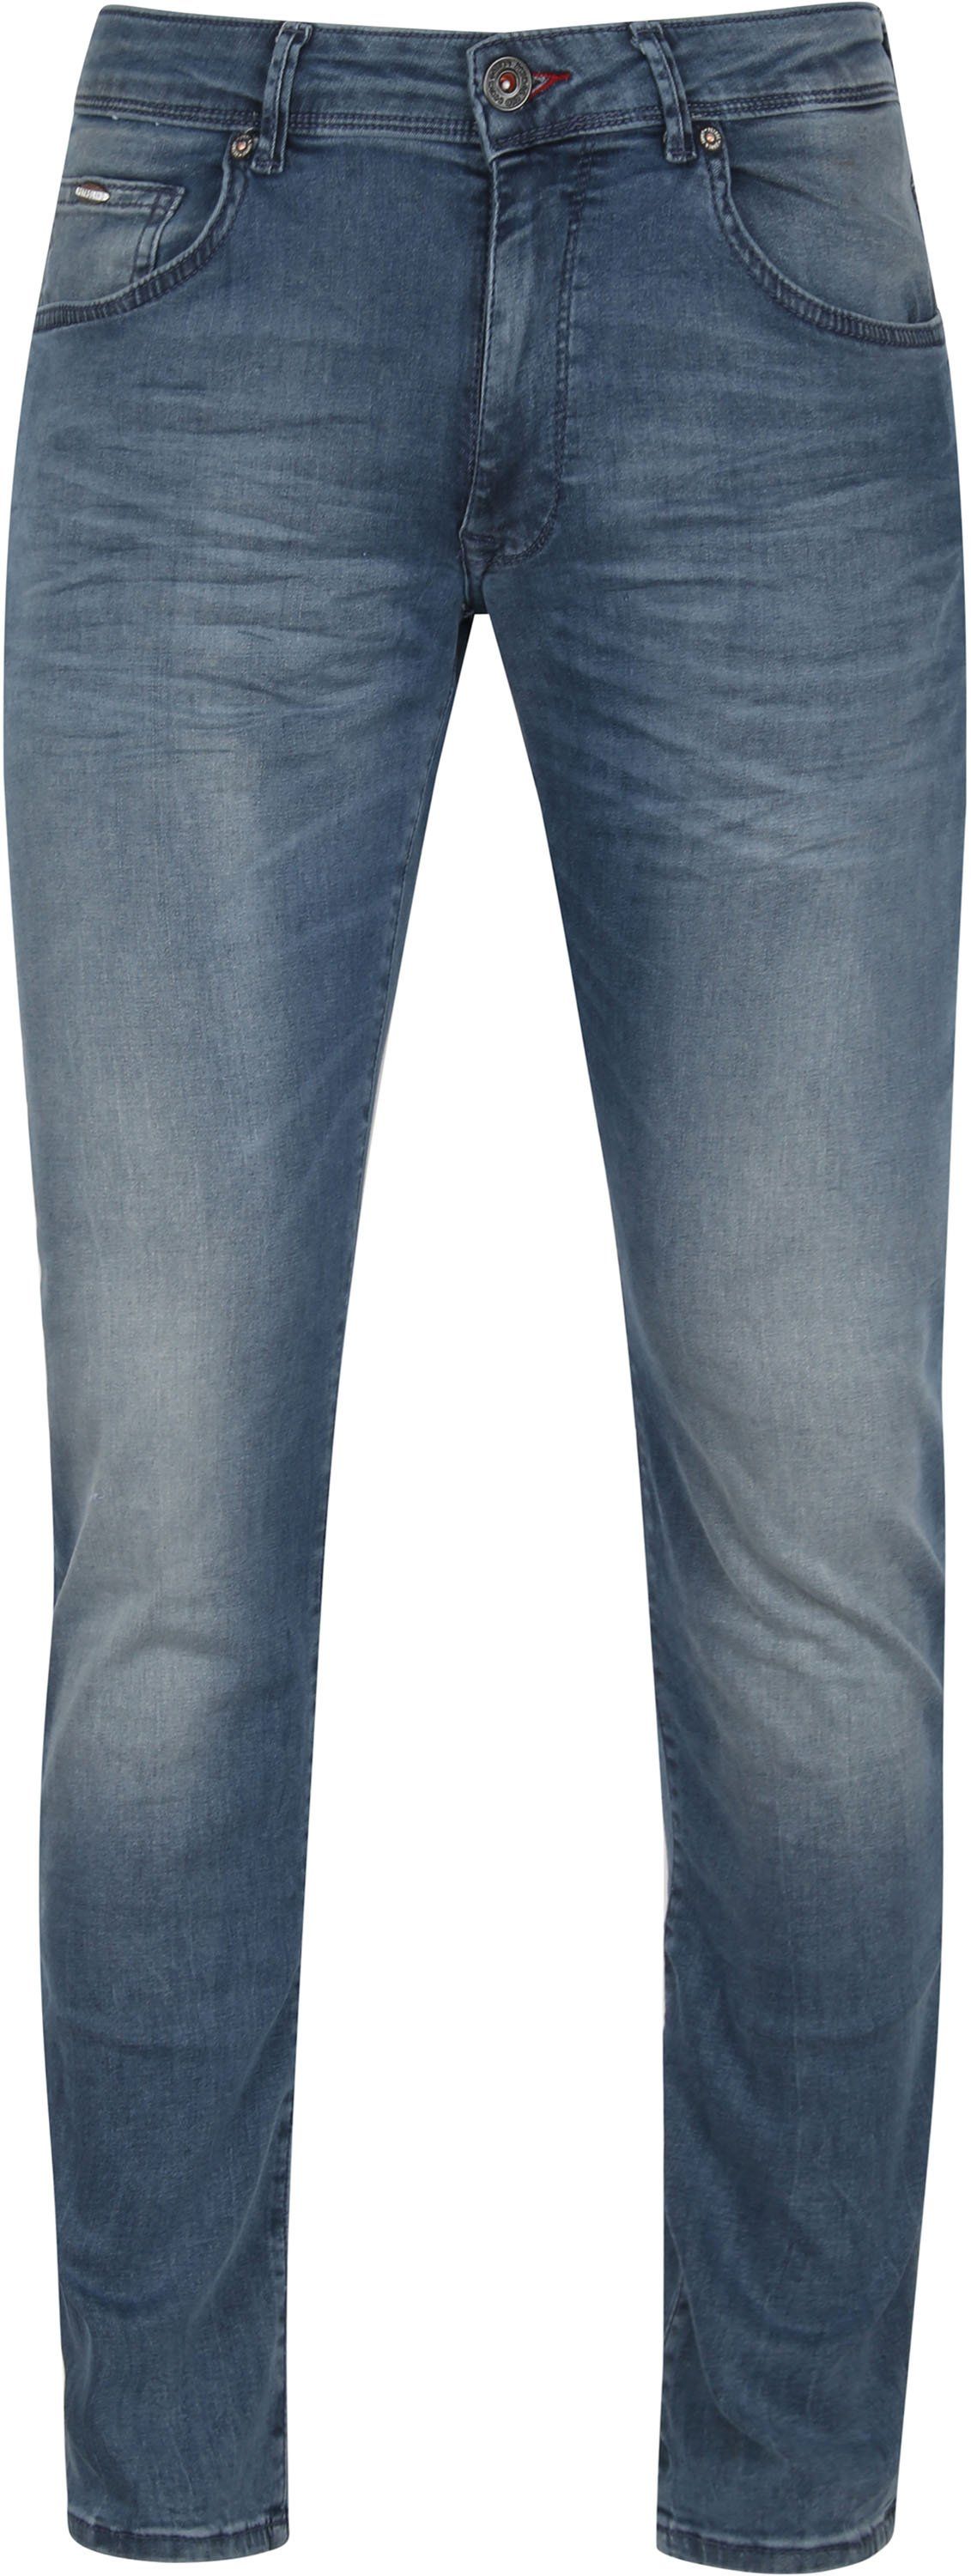 Petrol Seaham Jeans Black Blue size W 30